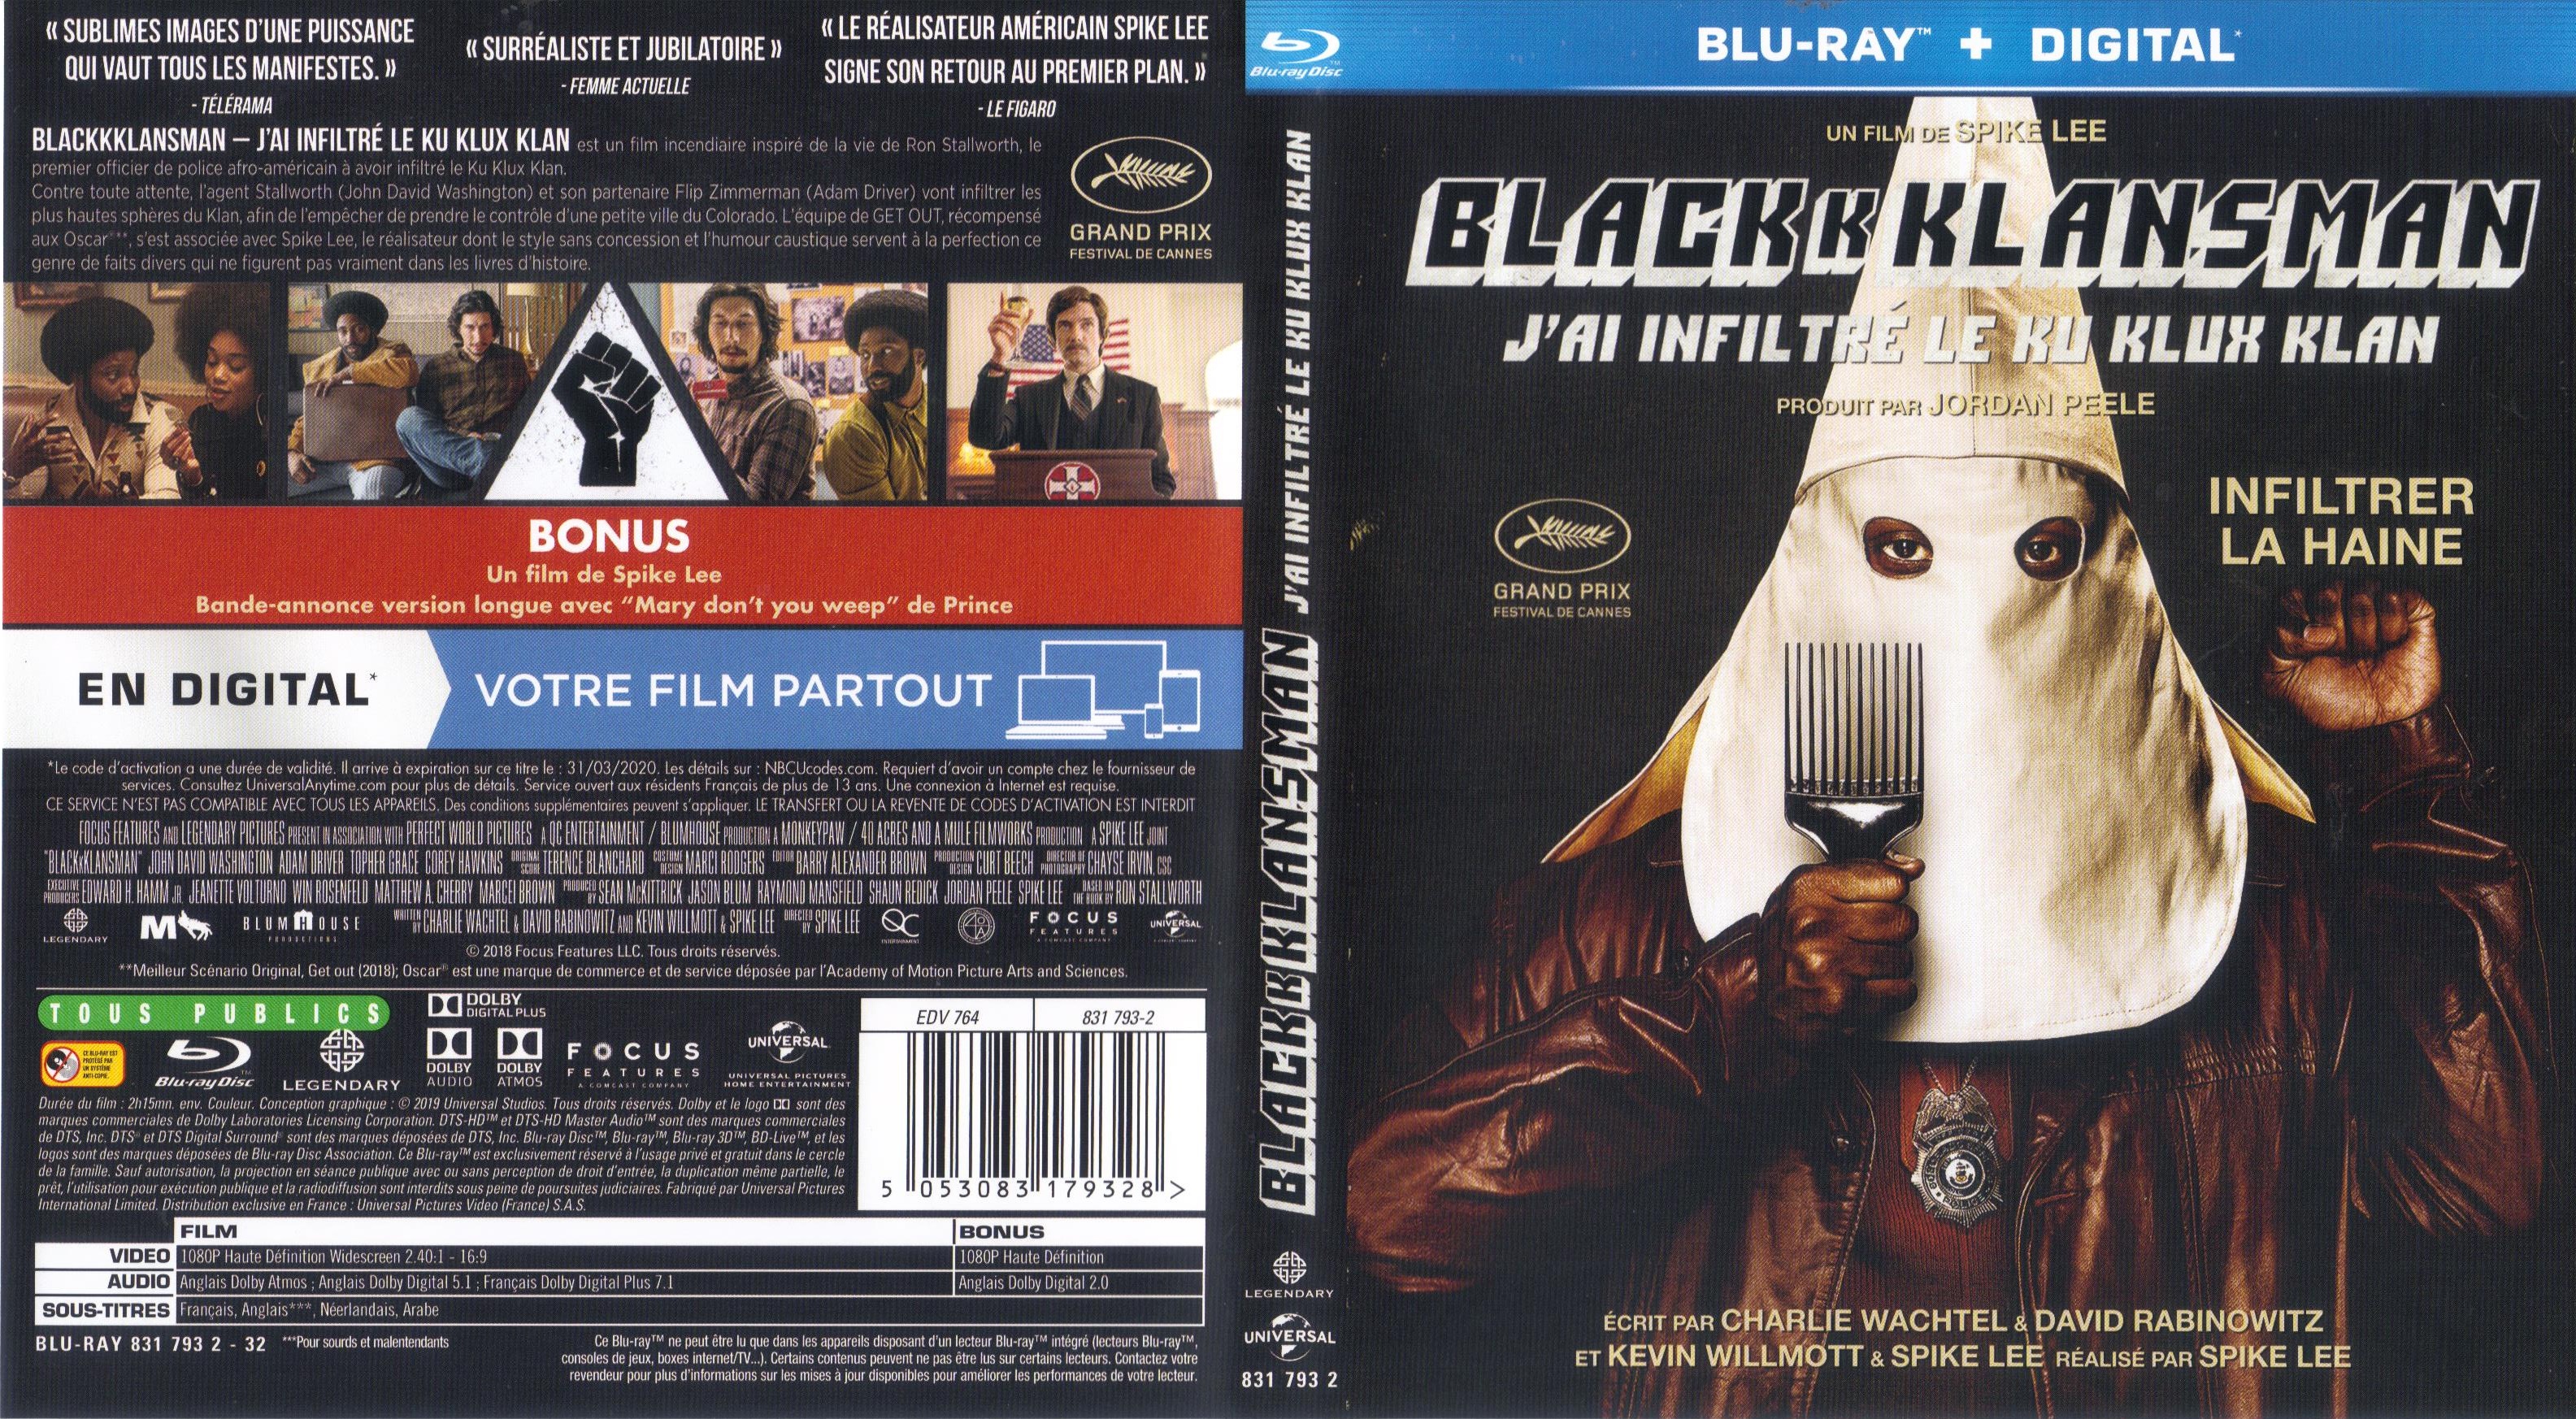 Jaquette DVD Blackkklansman (BLU-RAY)